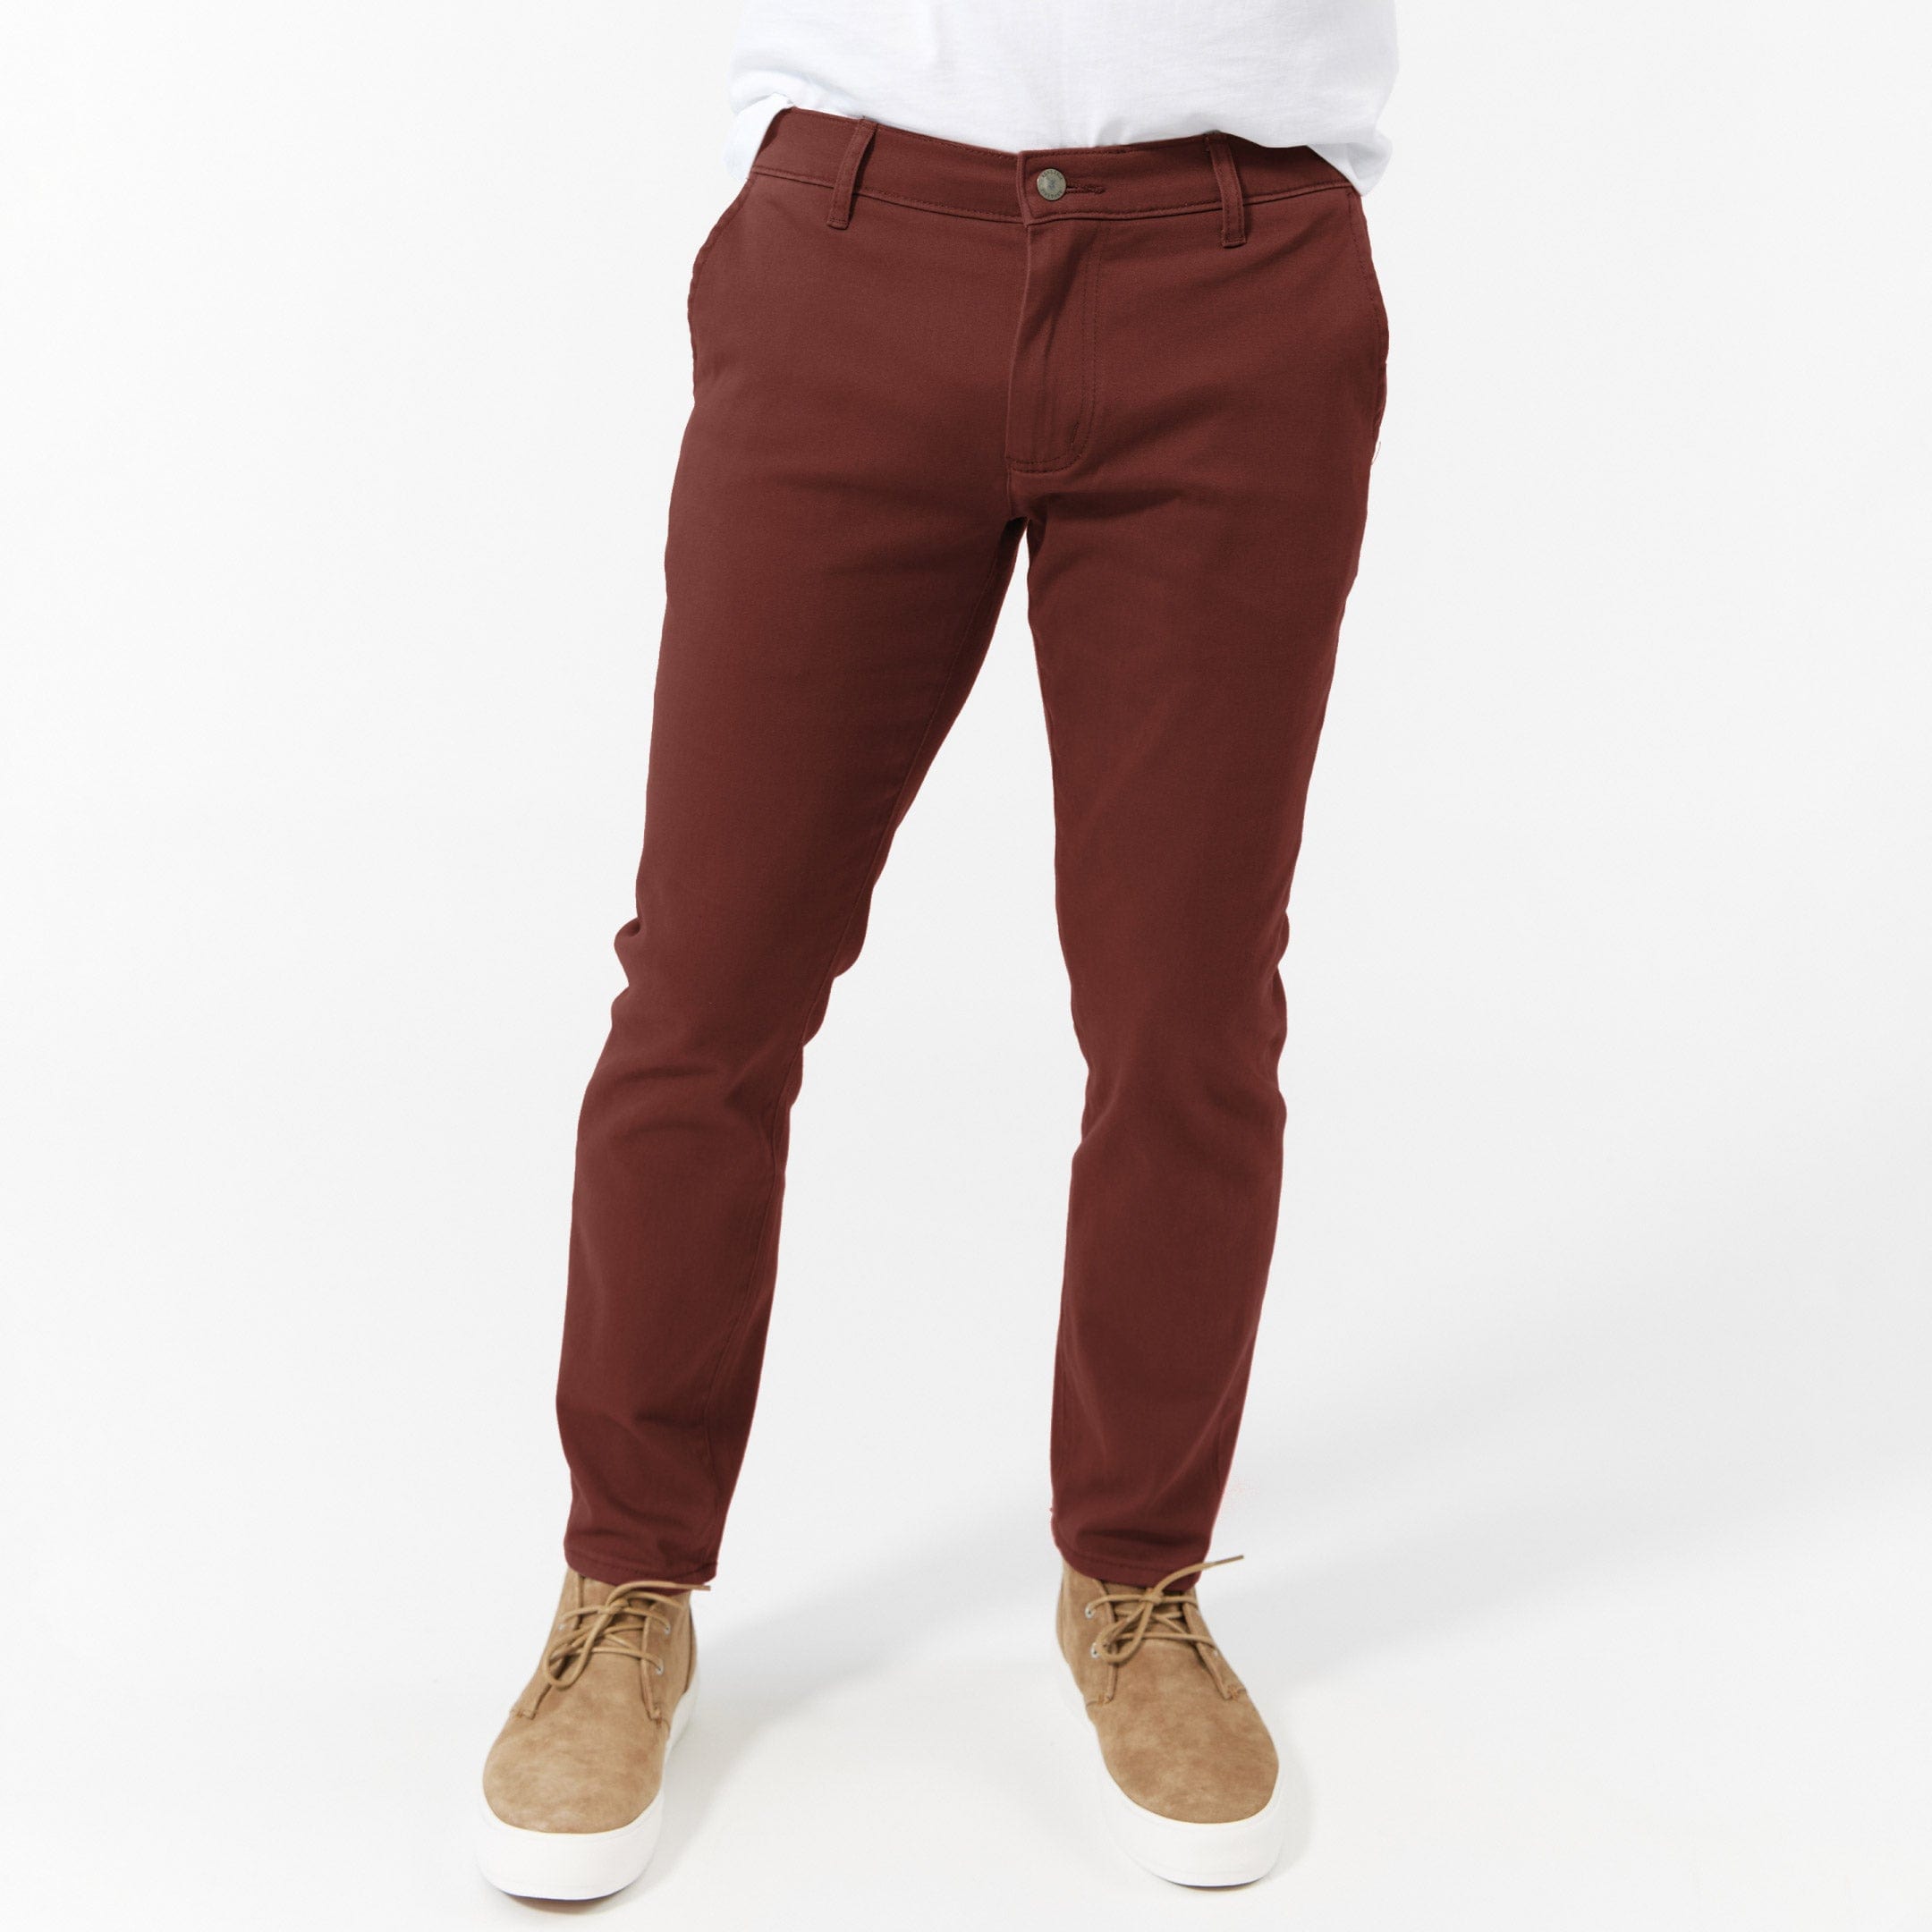 Men's Size 29x27 Pants | Men's 29